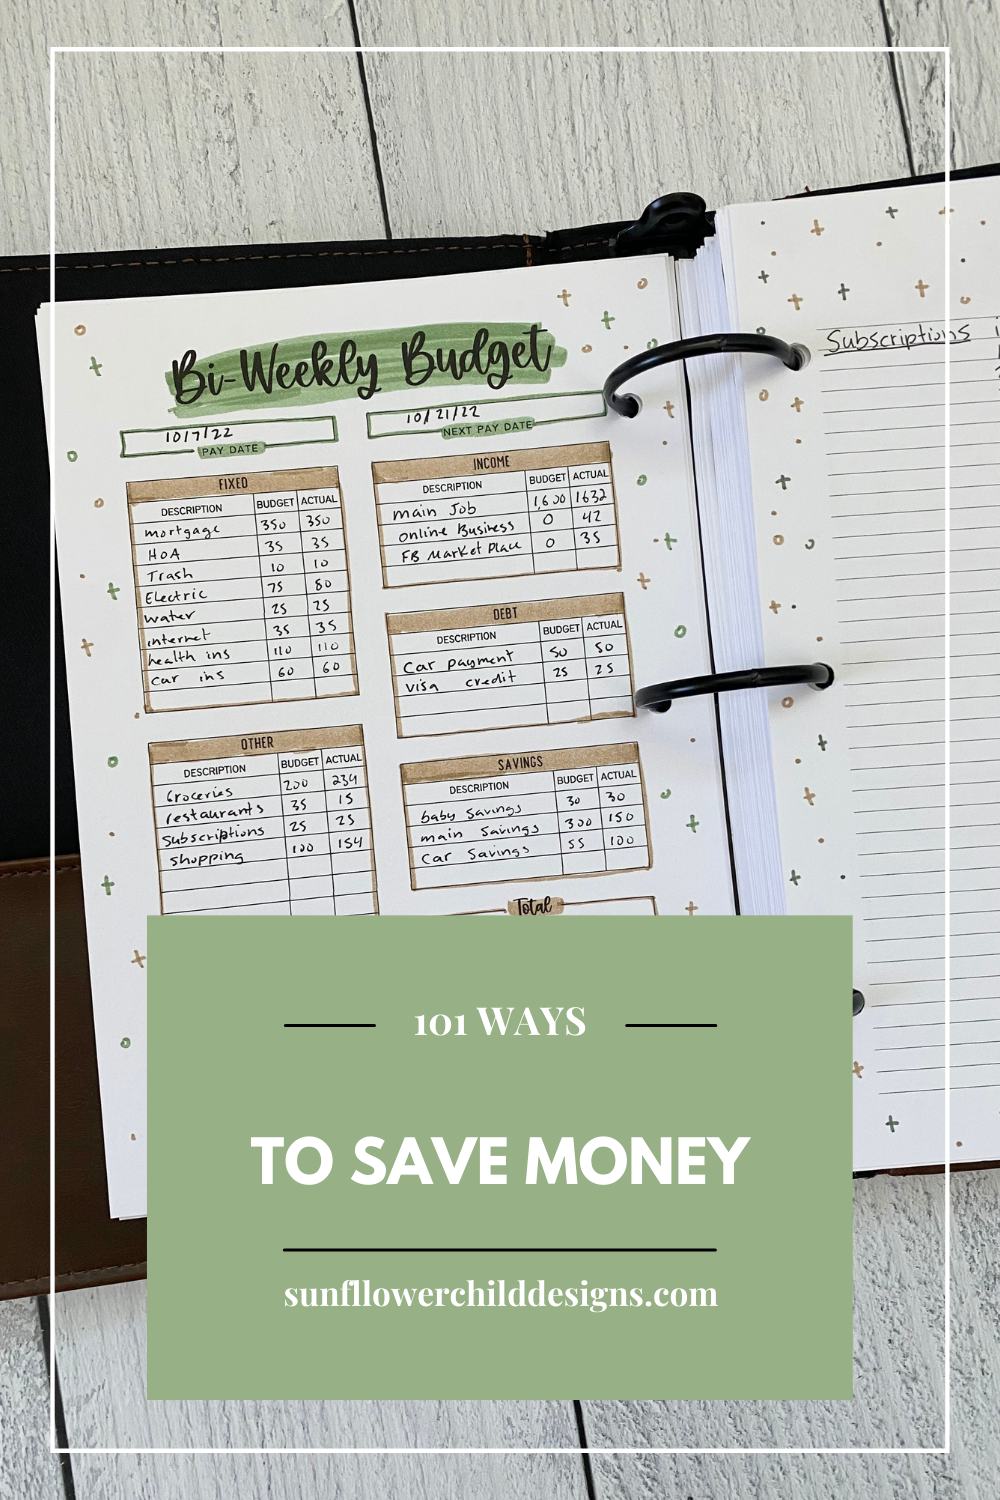 Ways to Save Money